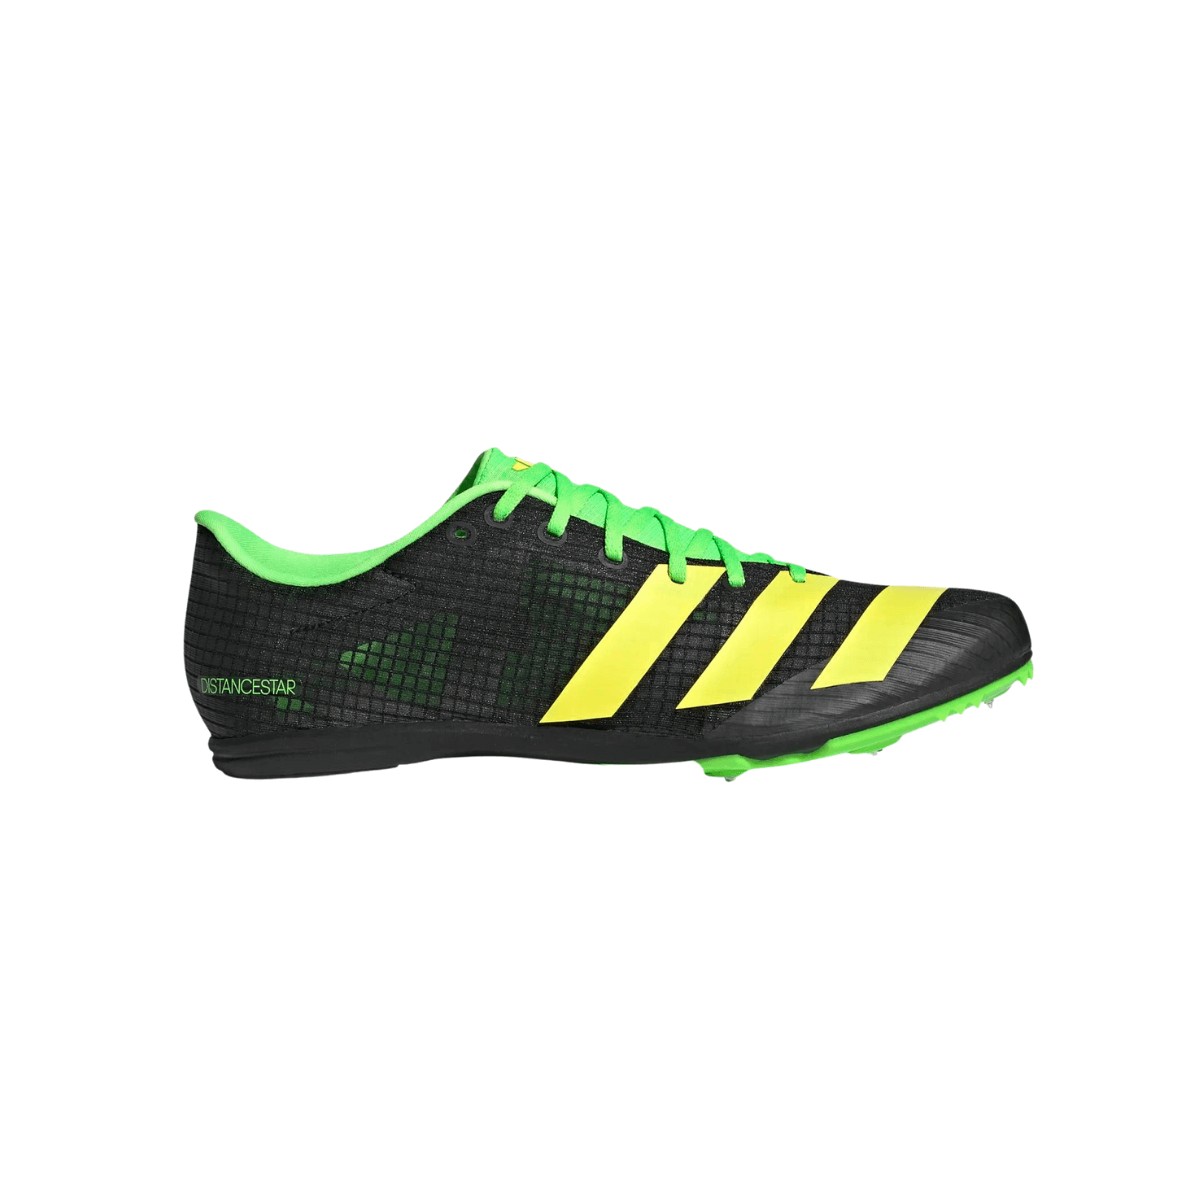 Adidas Distancestar Shoes Black Green AW22, Size UK 6